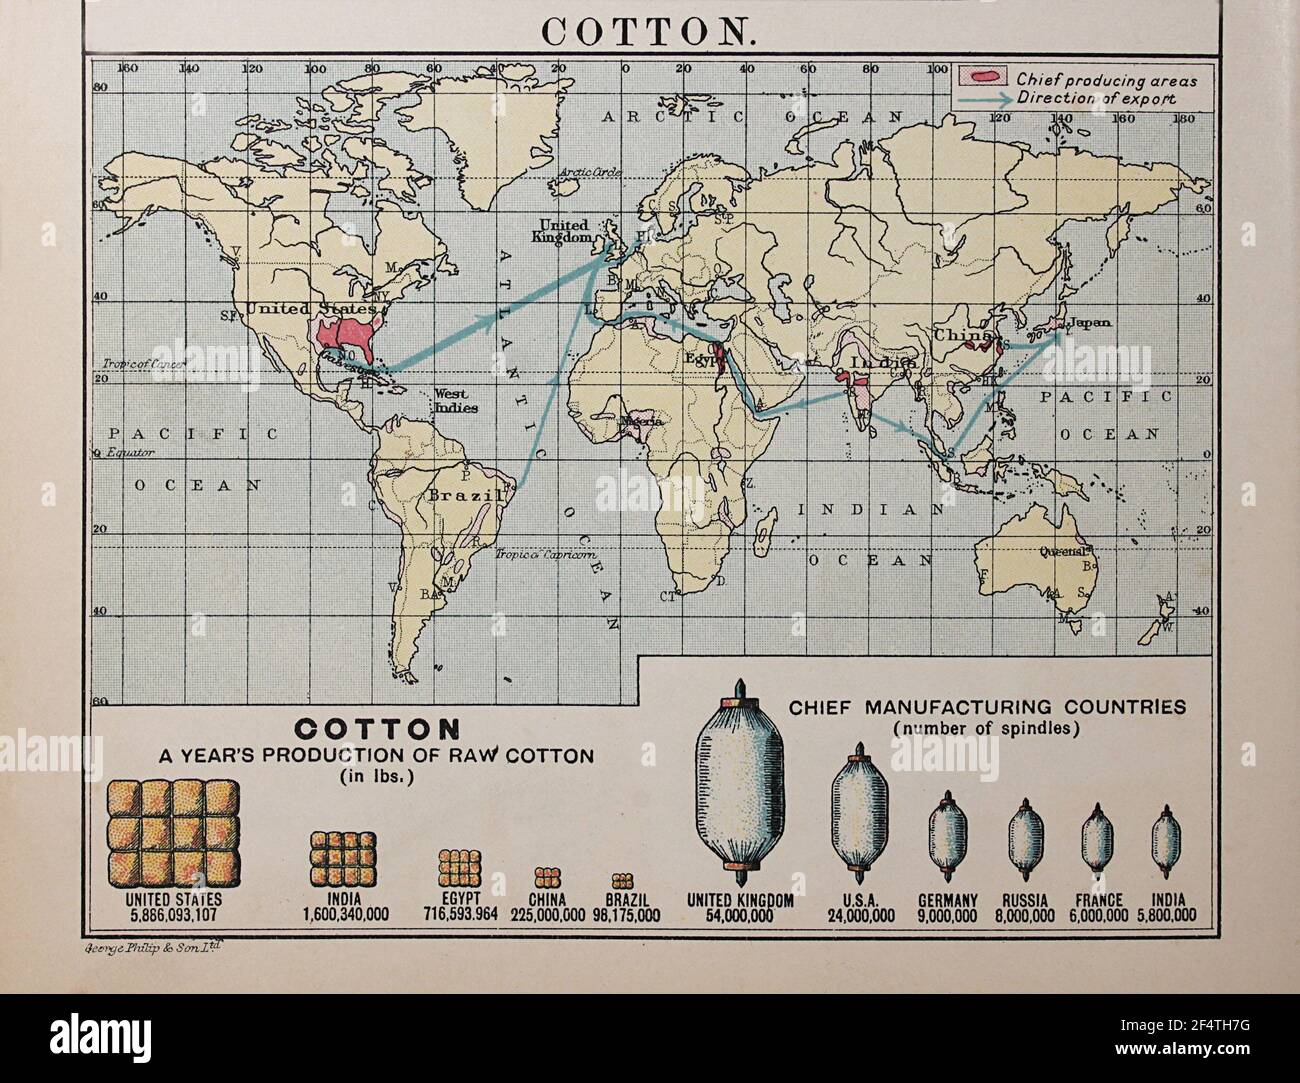 Weltkarte aus „Philips“ Chamber of Commerce Atlas“, 1912, zeigt Baumwollproduktion. Stockfoto